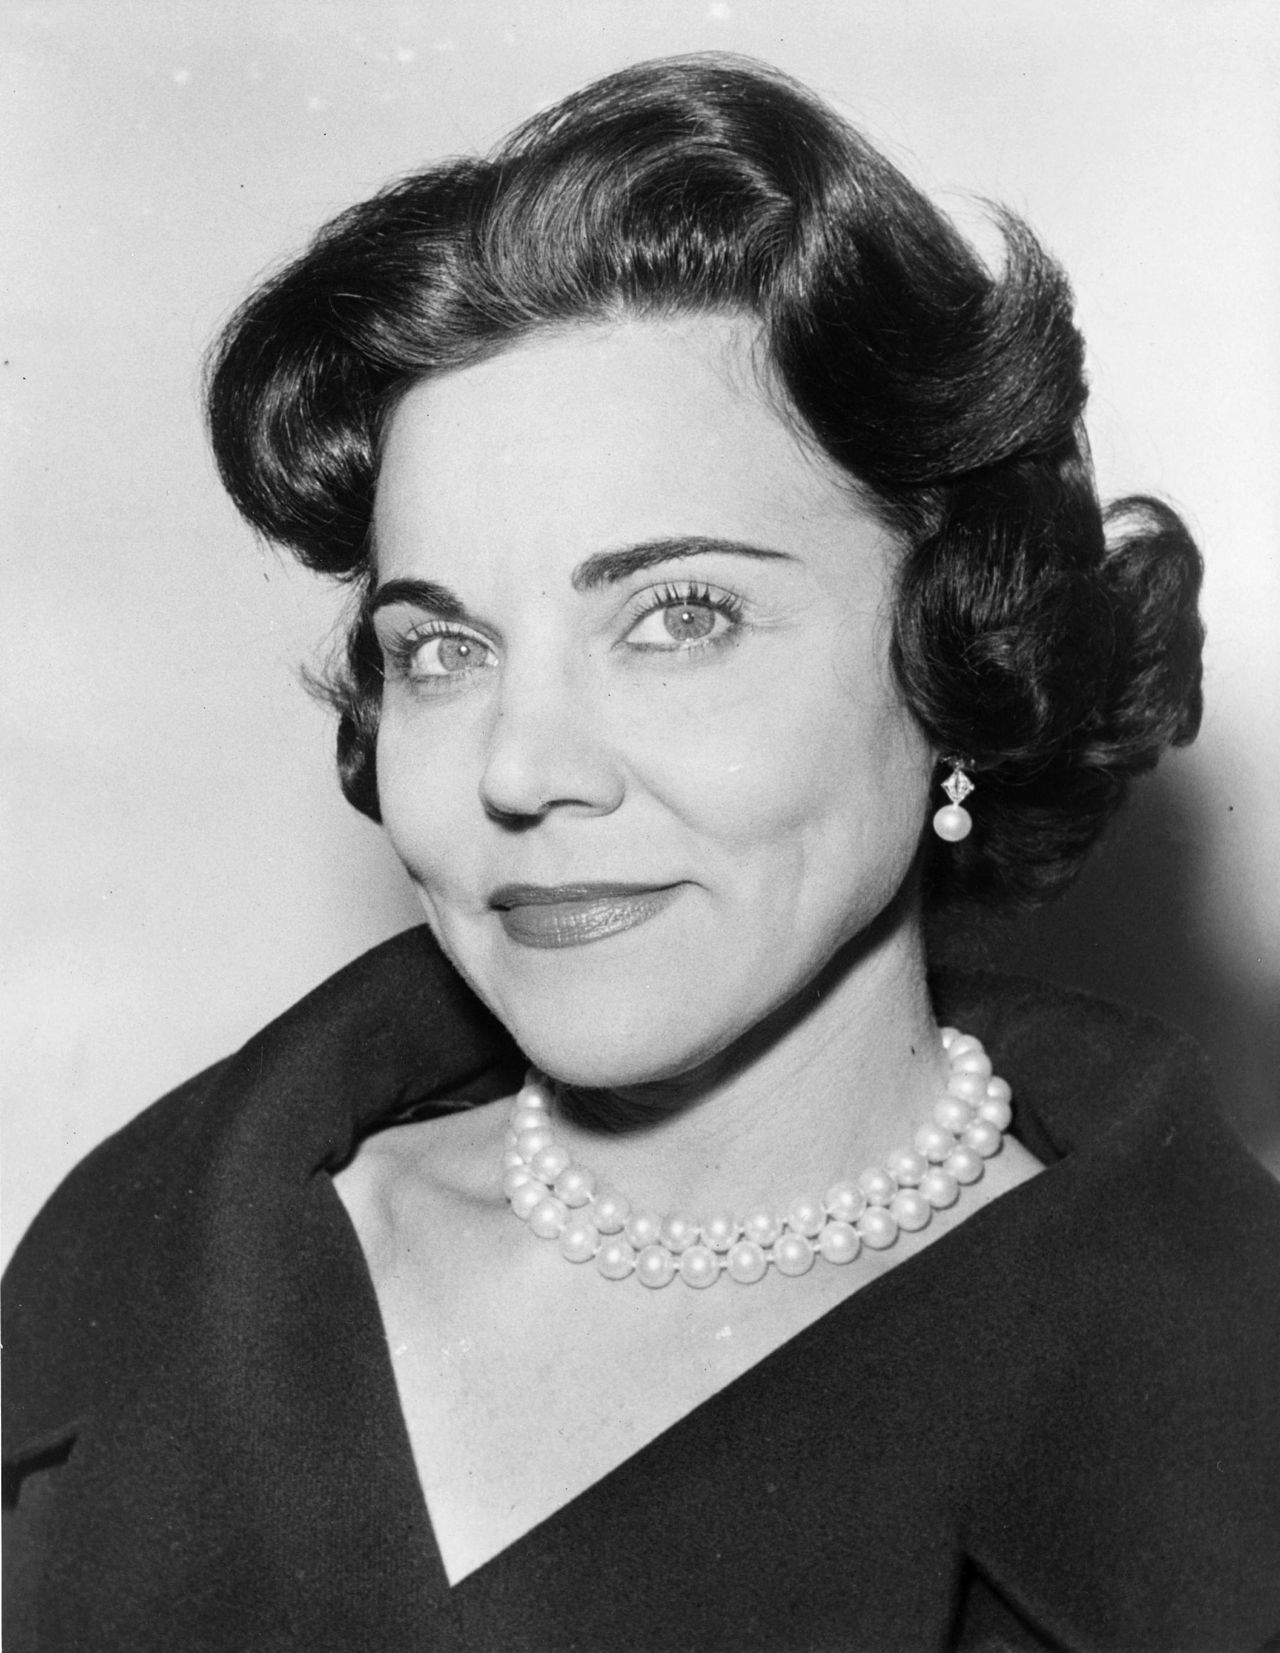 black and white image of Esther Lederer, also known as columnist Ann Landers